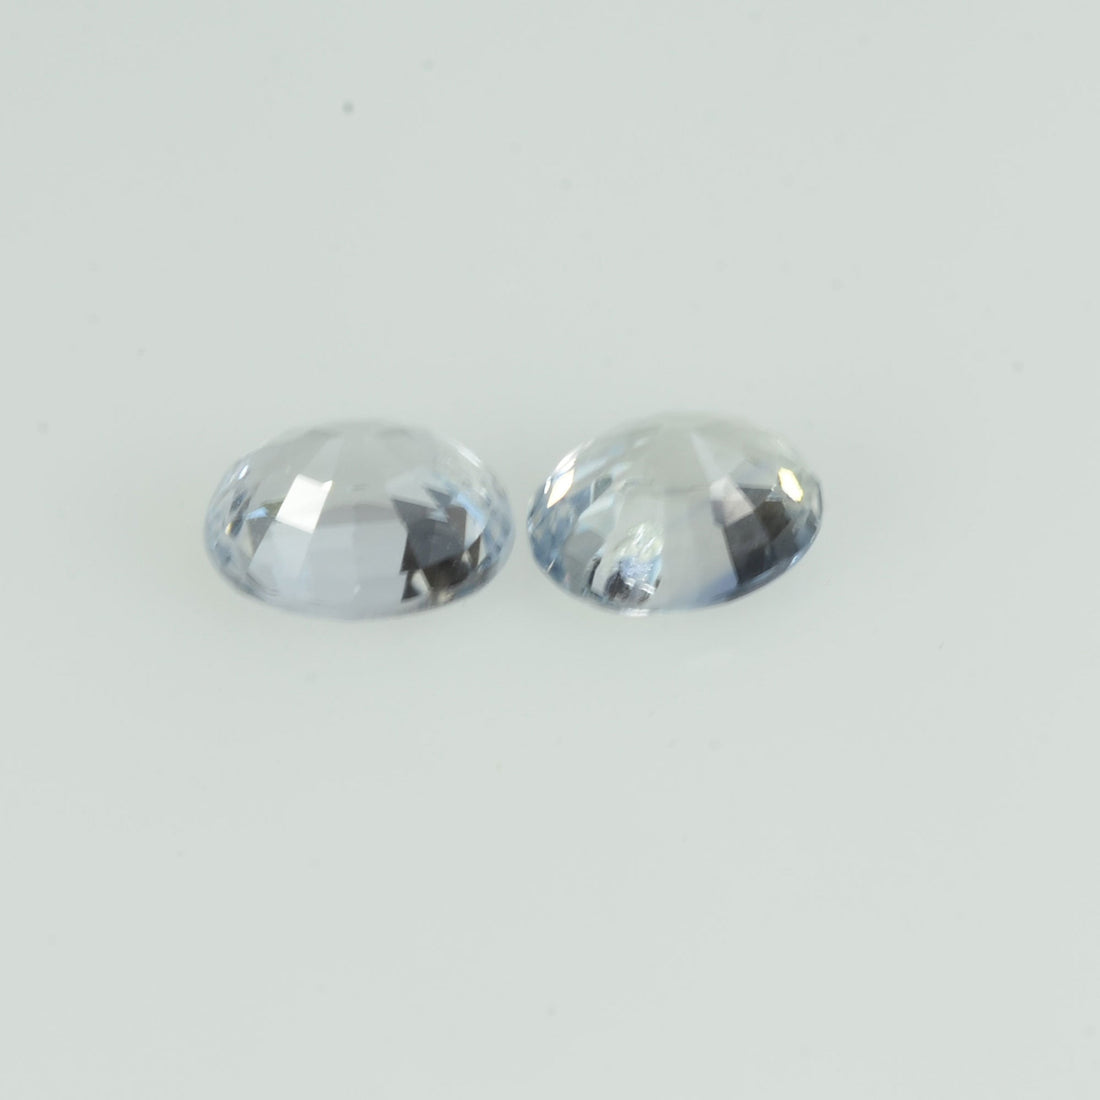 0.72 cts Natural White Sapphire Loose Pair Gemstone Oval Cut - Thai Gems Export Ltd.